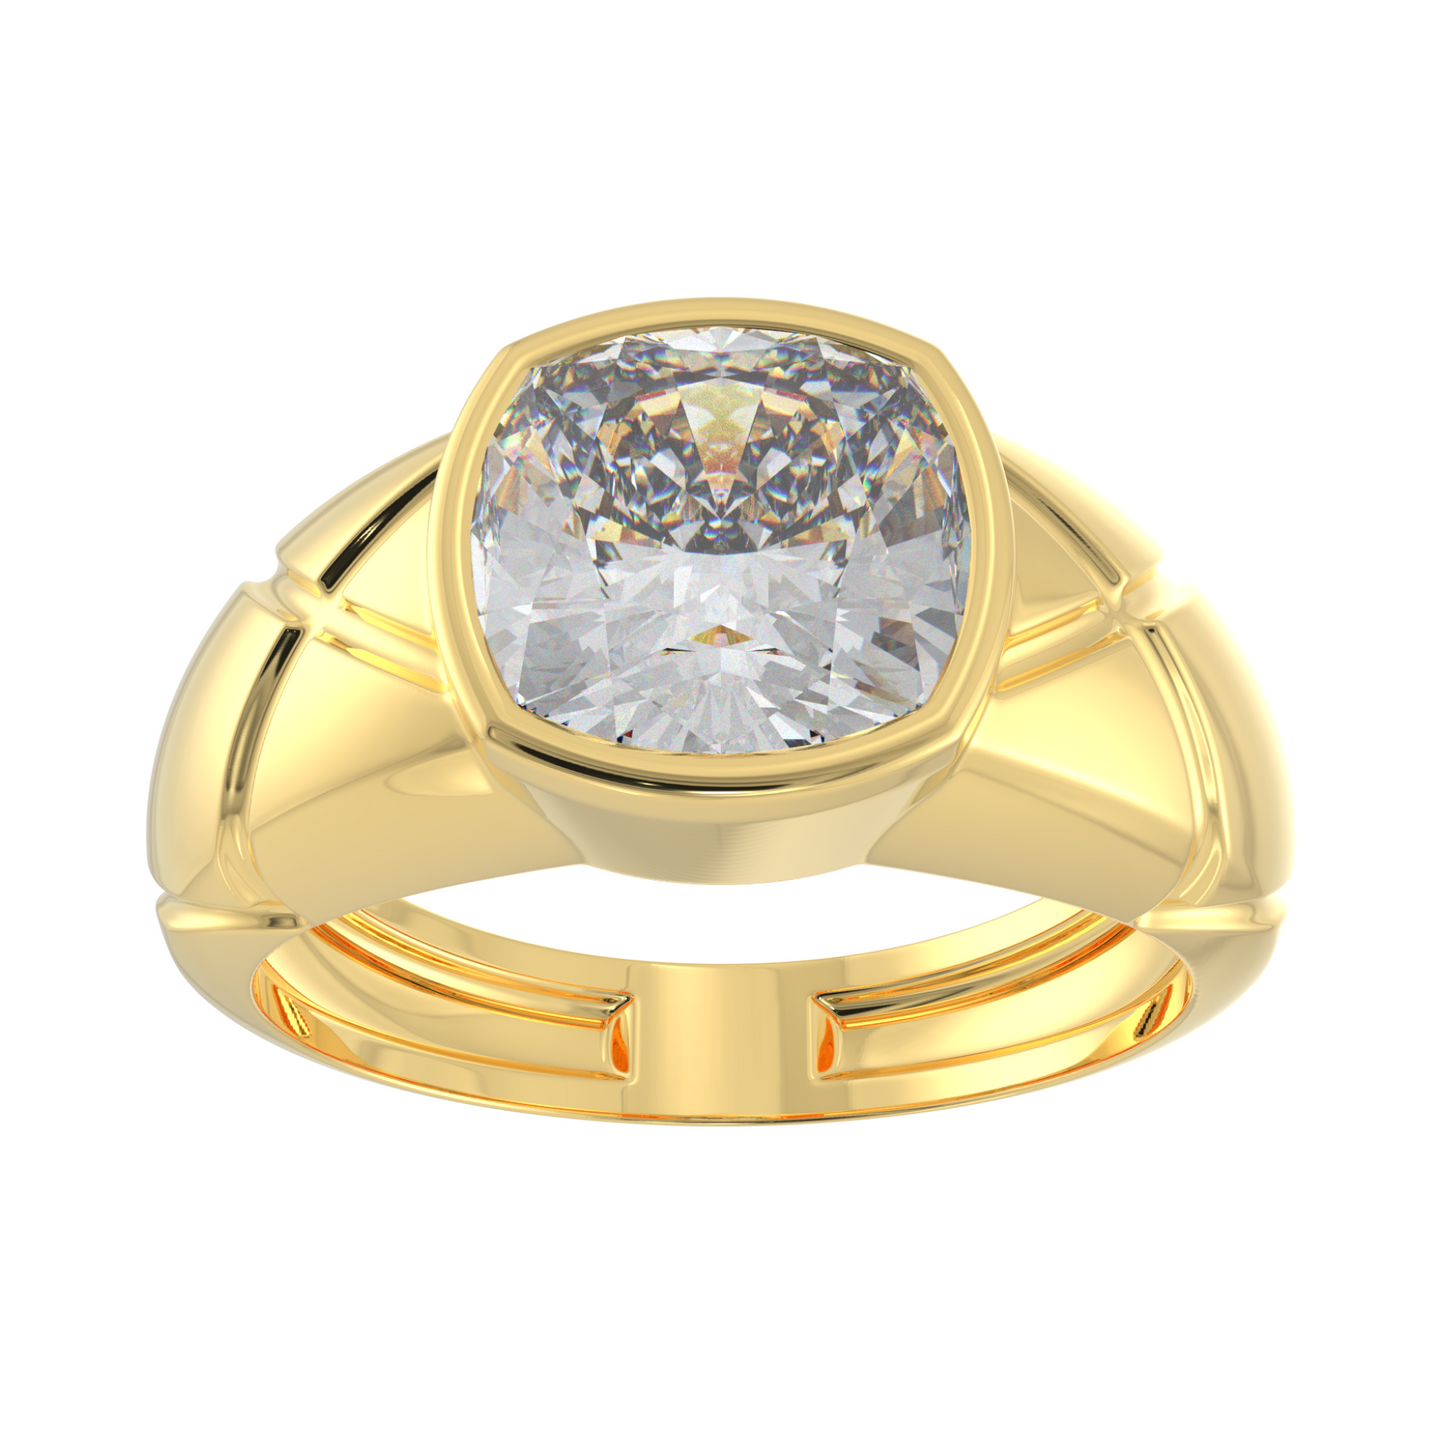 Cushion Cut Moissanite Diamond Ring in Gold